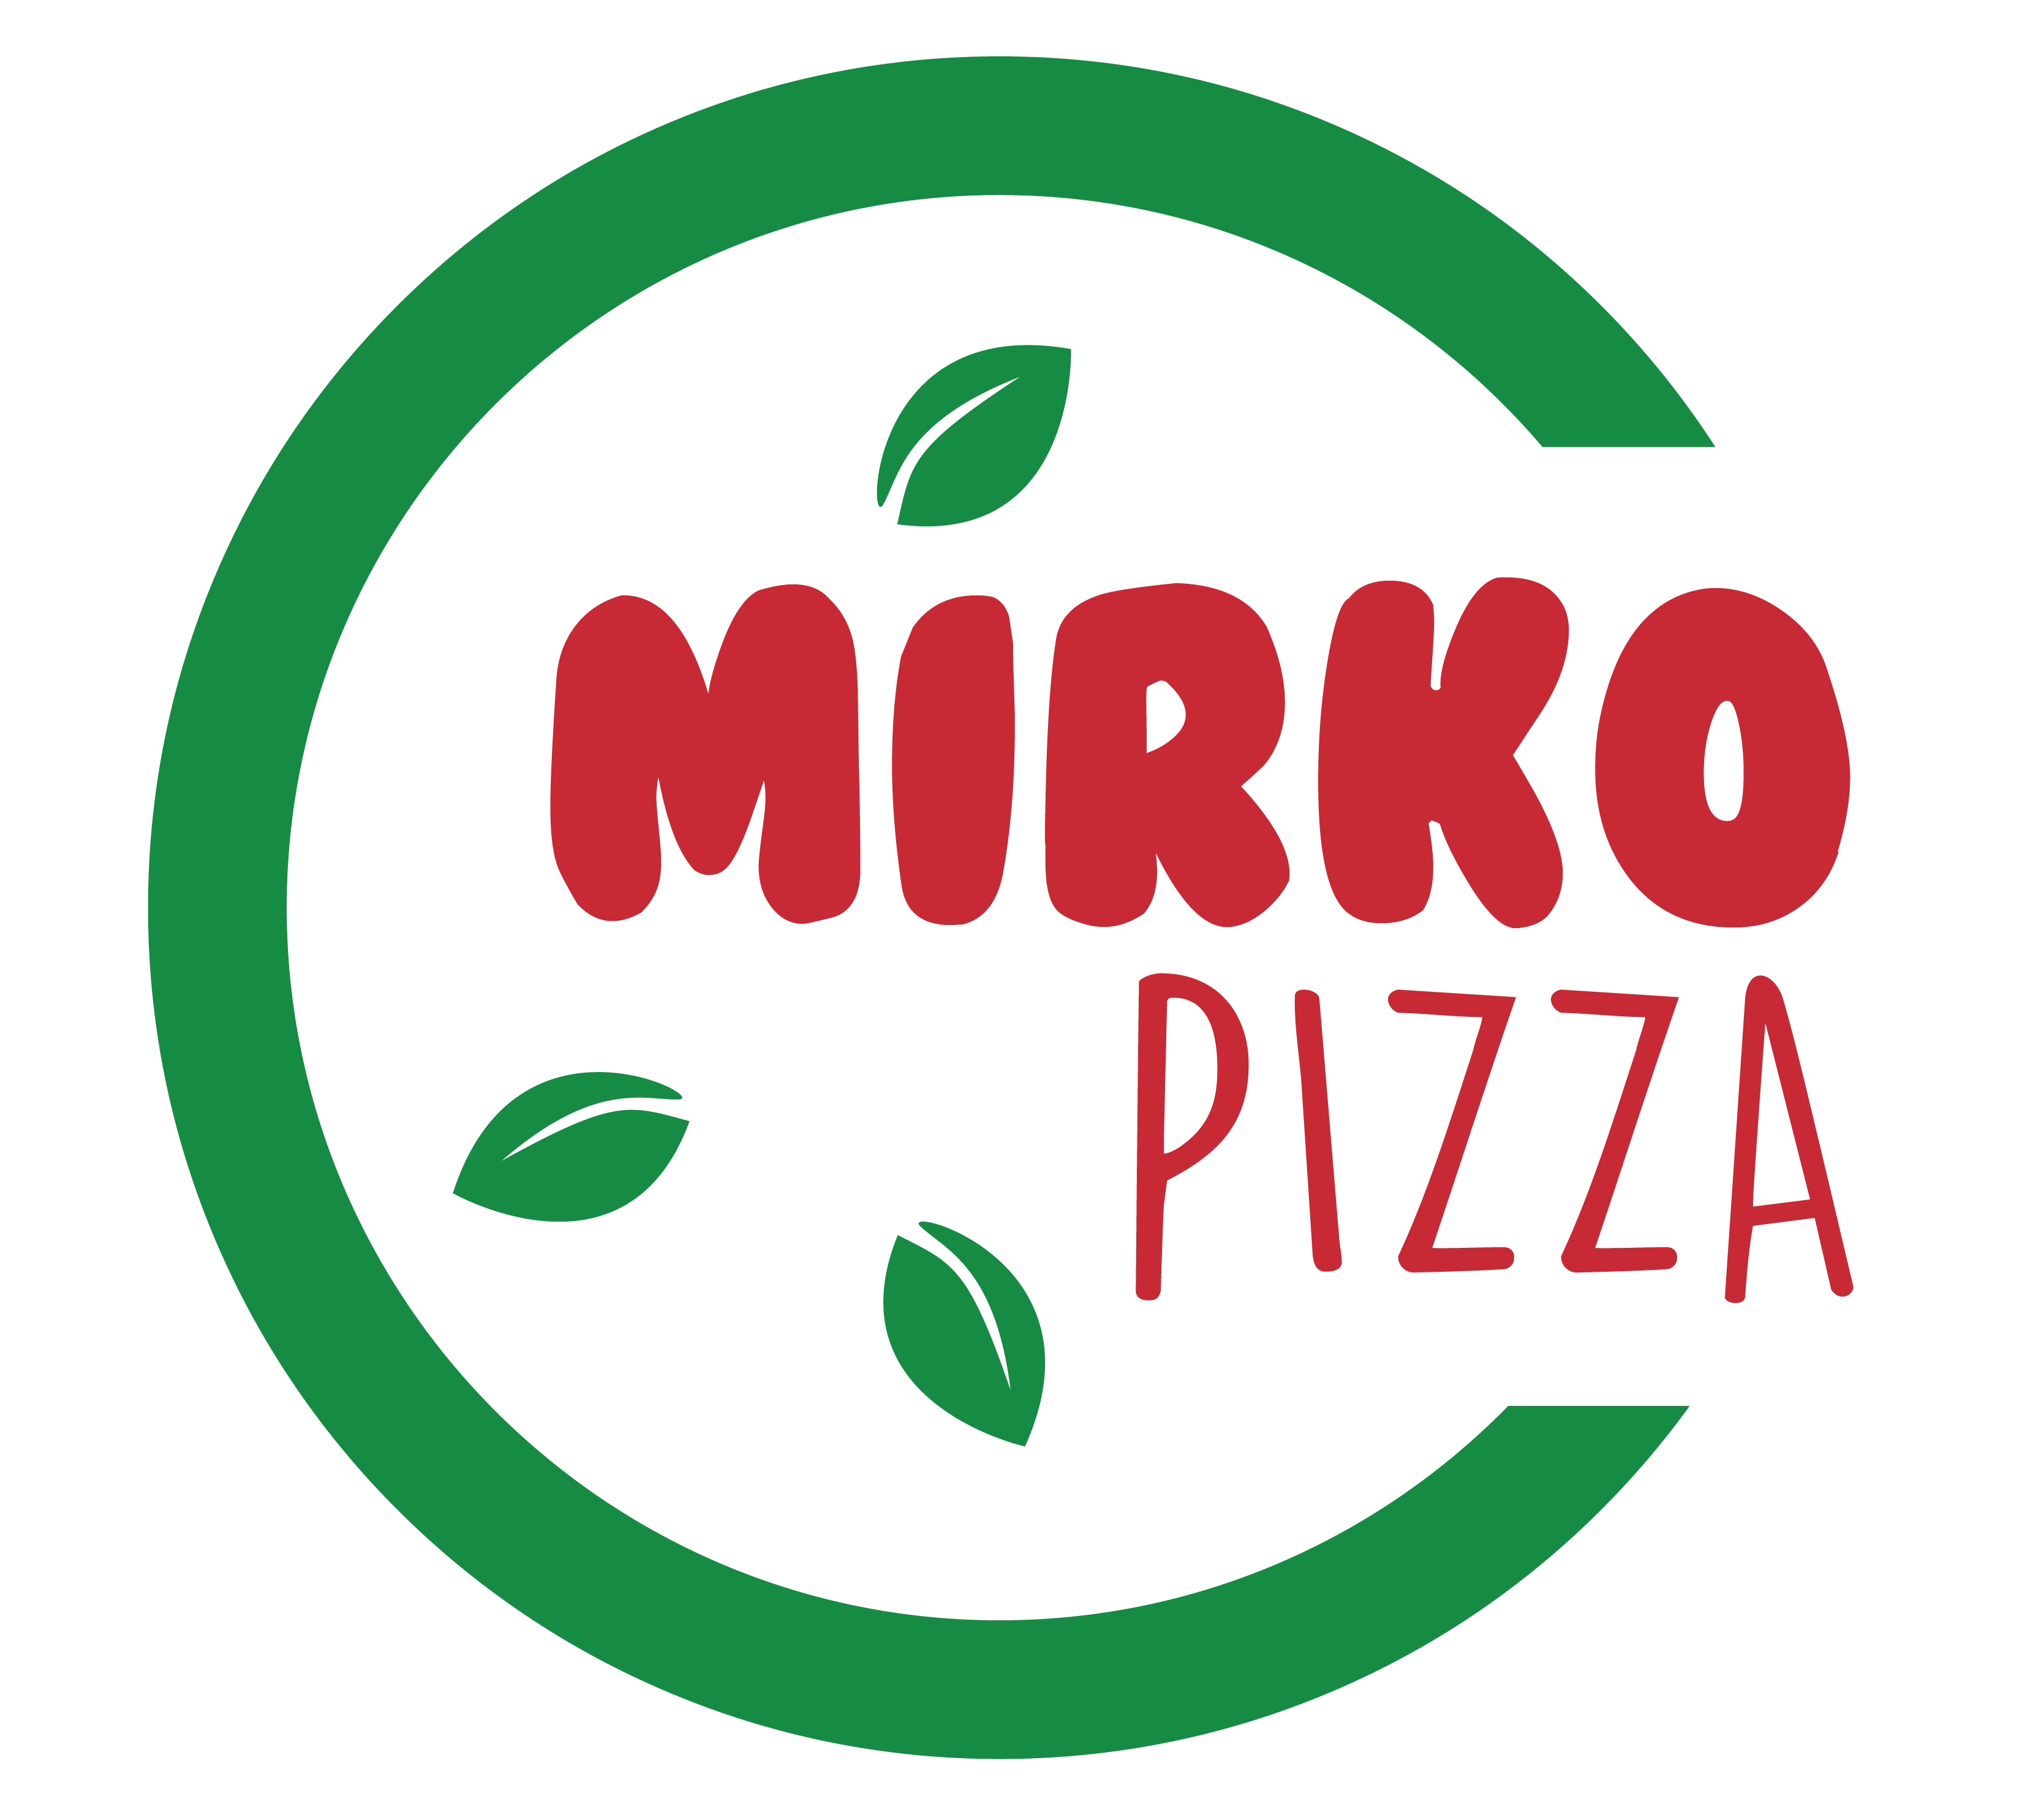 Mirko Pizza Final Logo Colorized Green Main